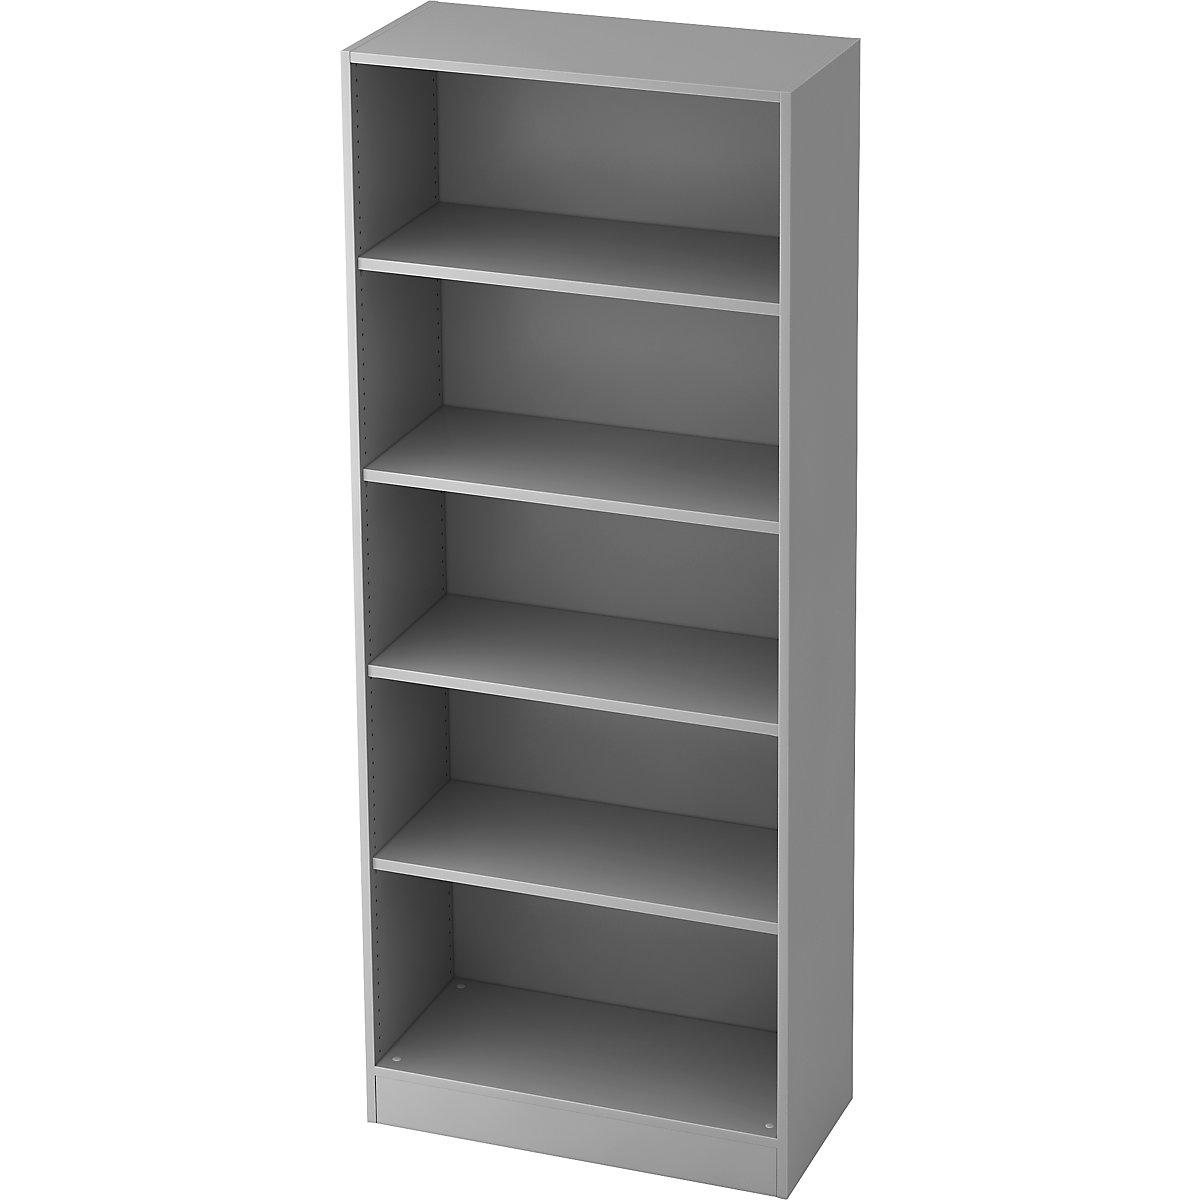 Shelf unit